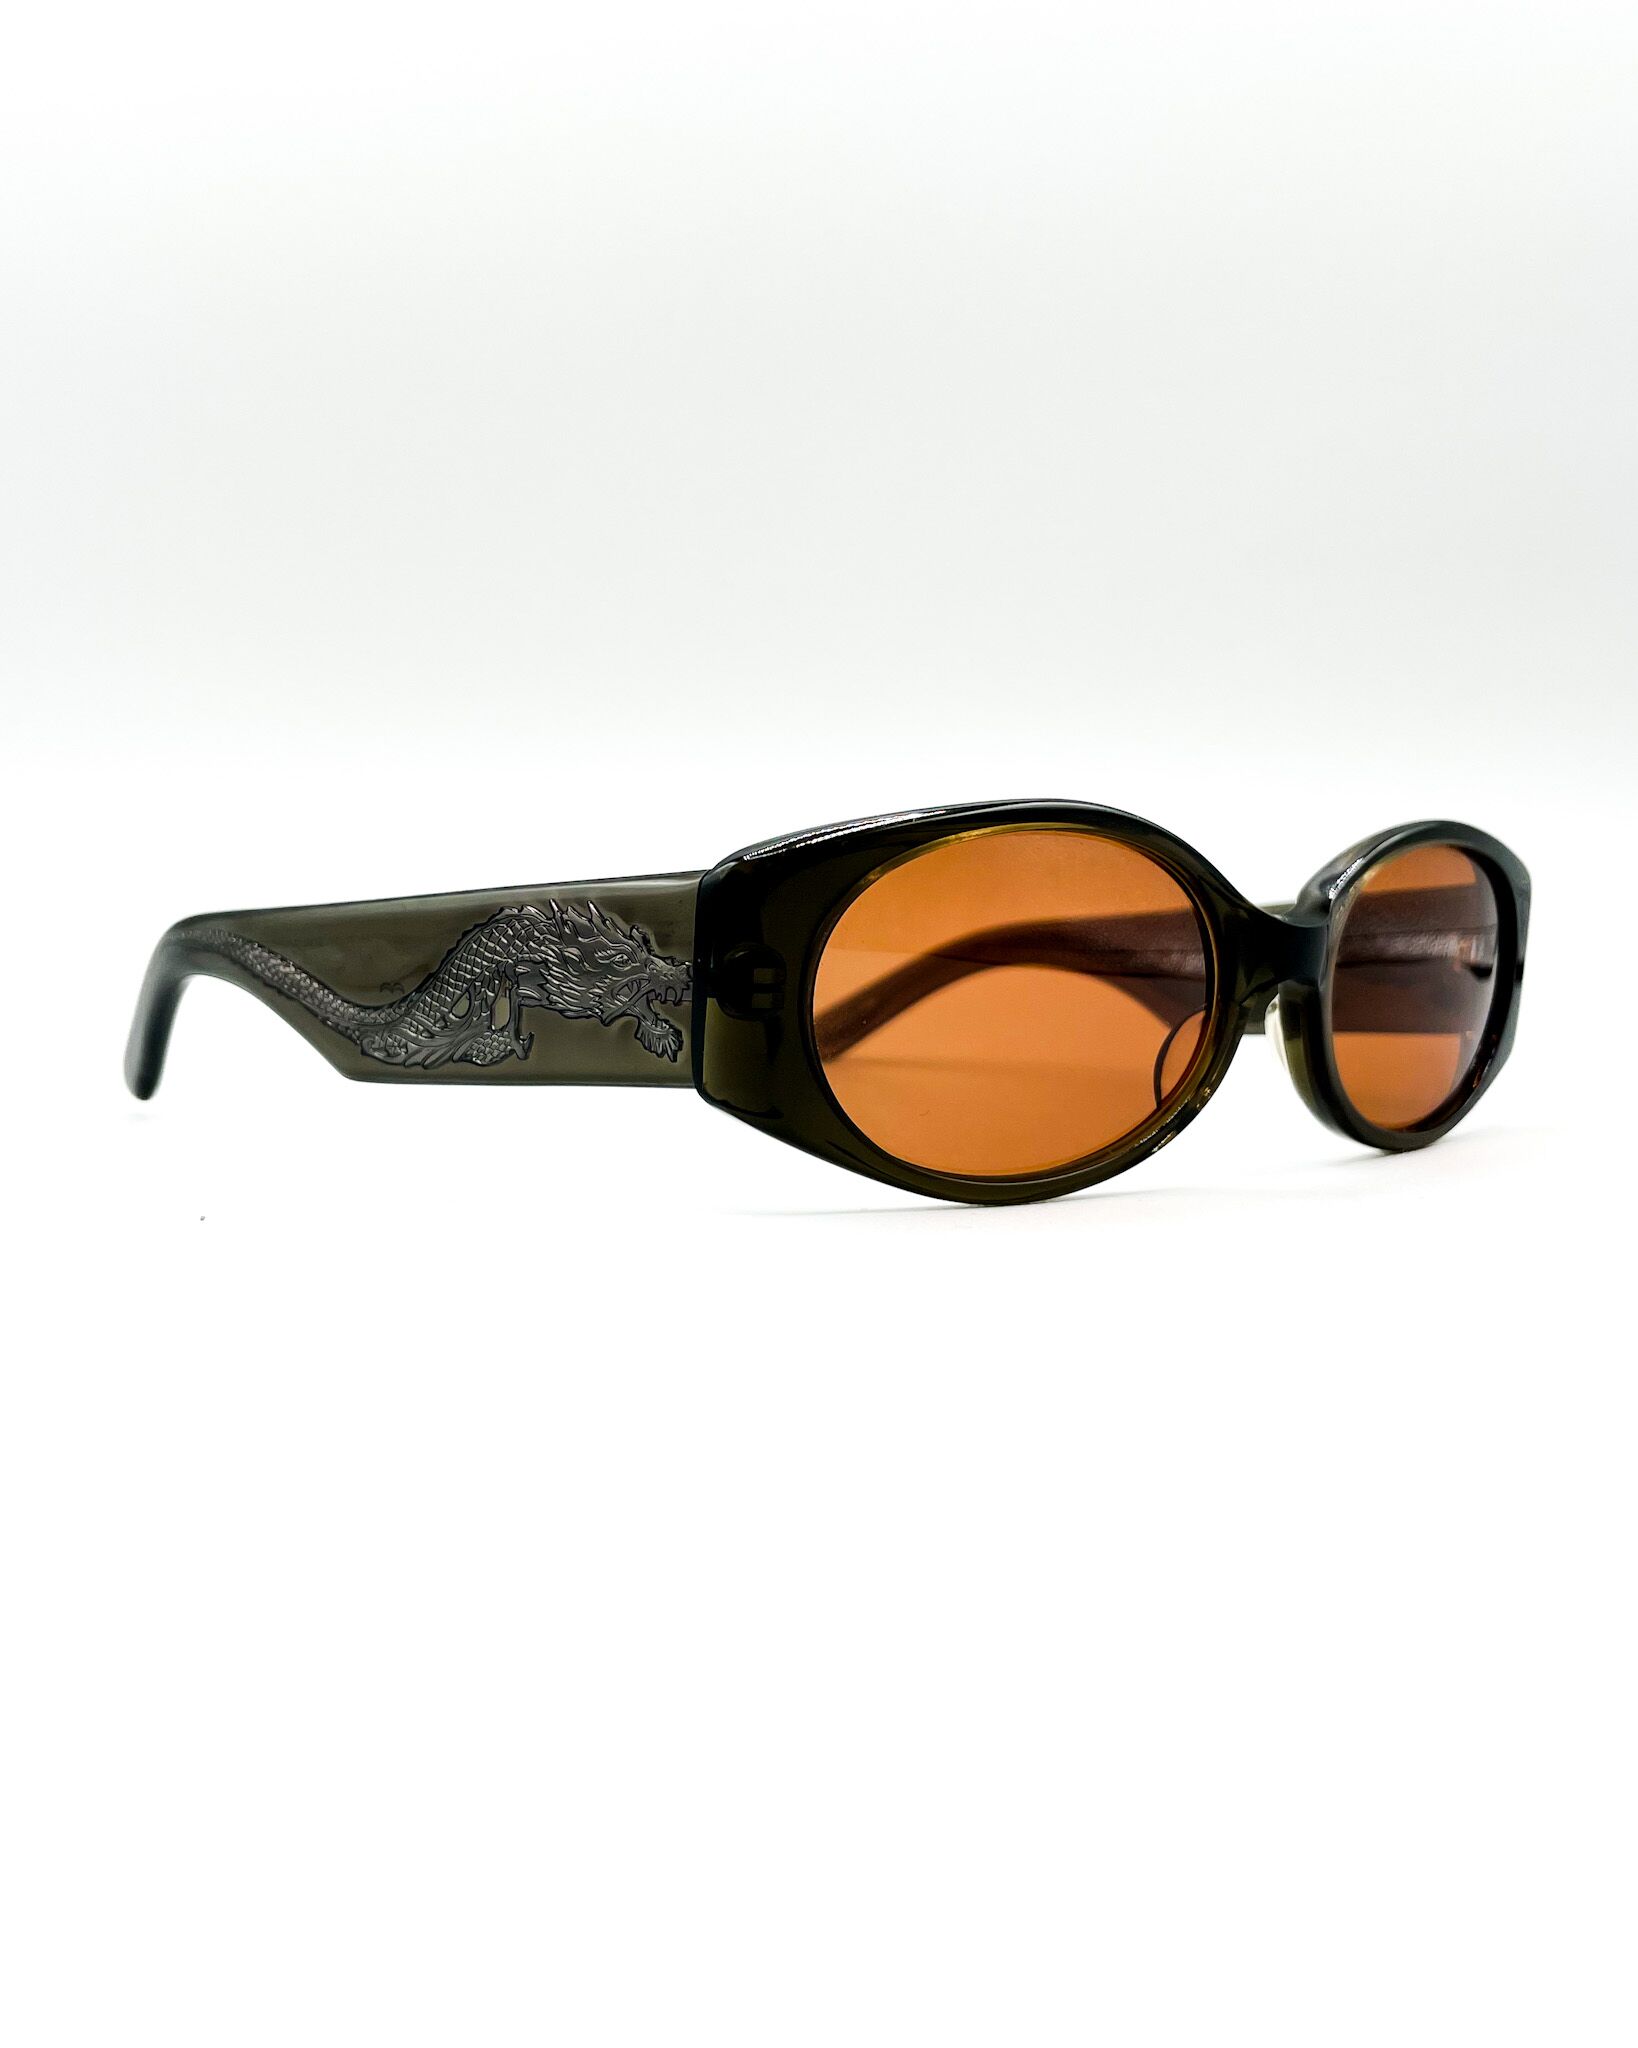 Jean Paul Gaultier 56-0021 - Slippy shades